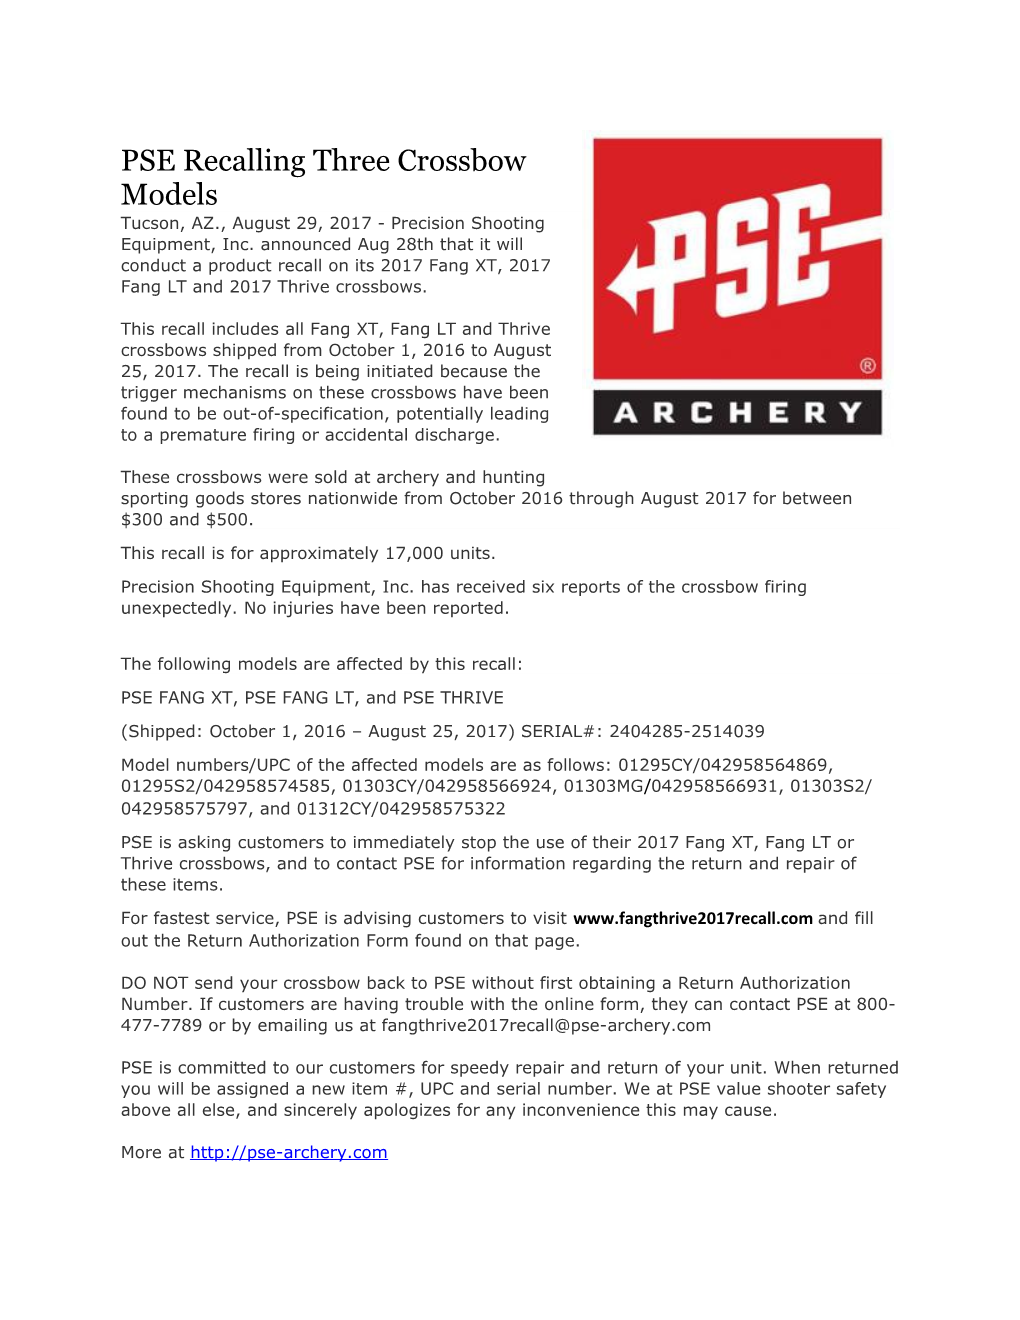 PSE Recalling Three Crossbow Models